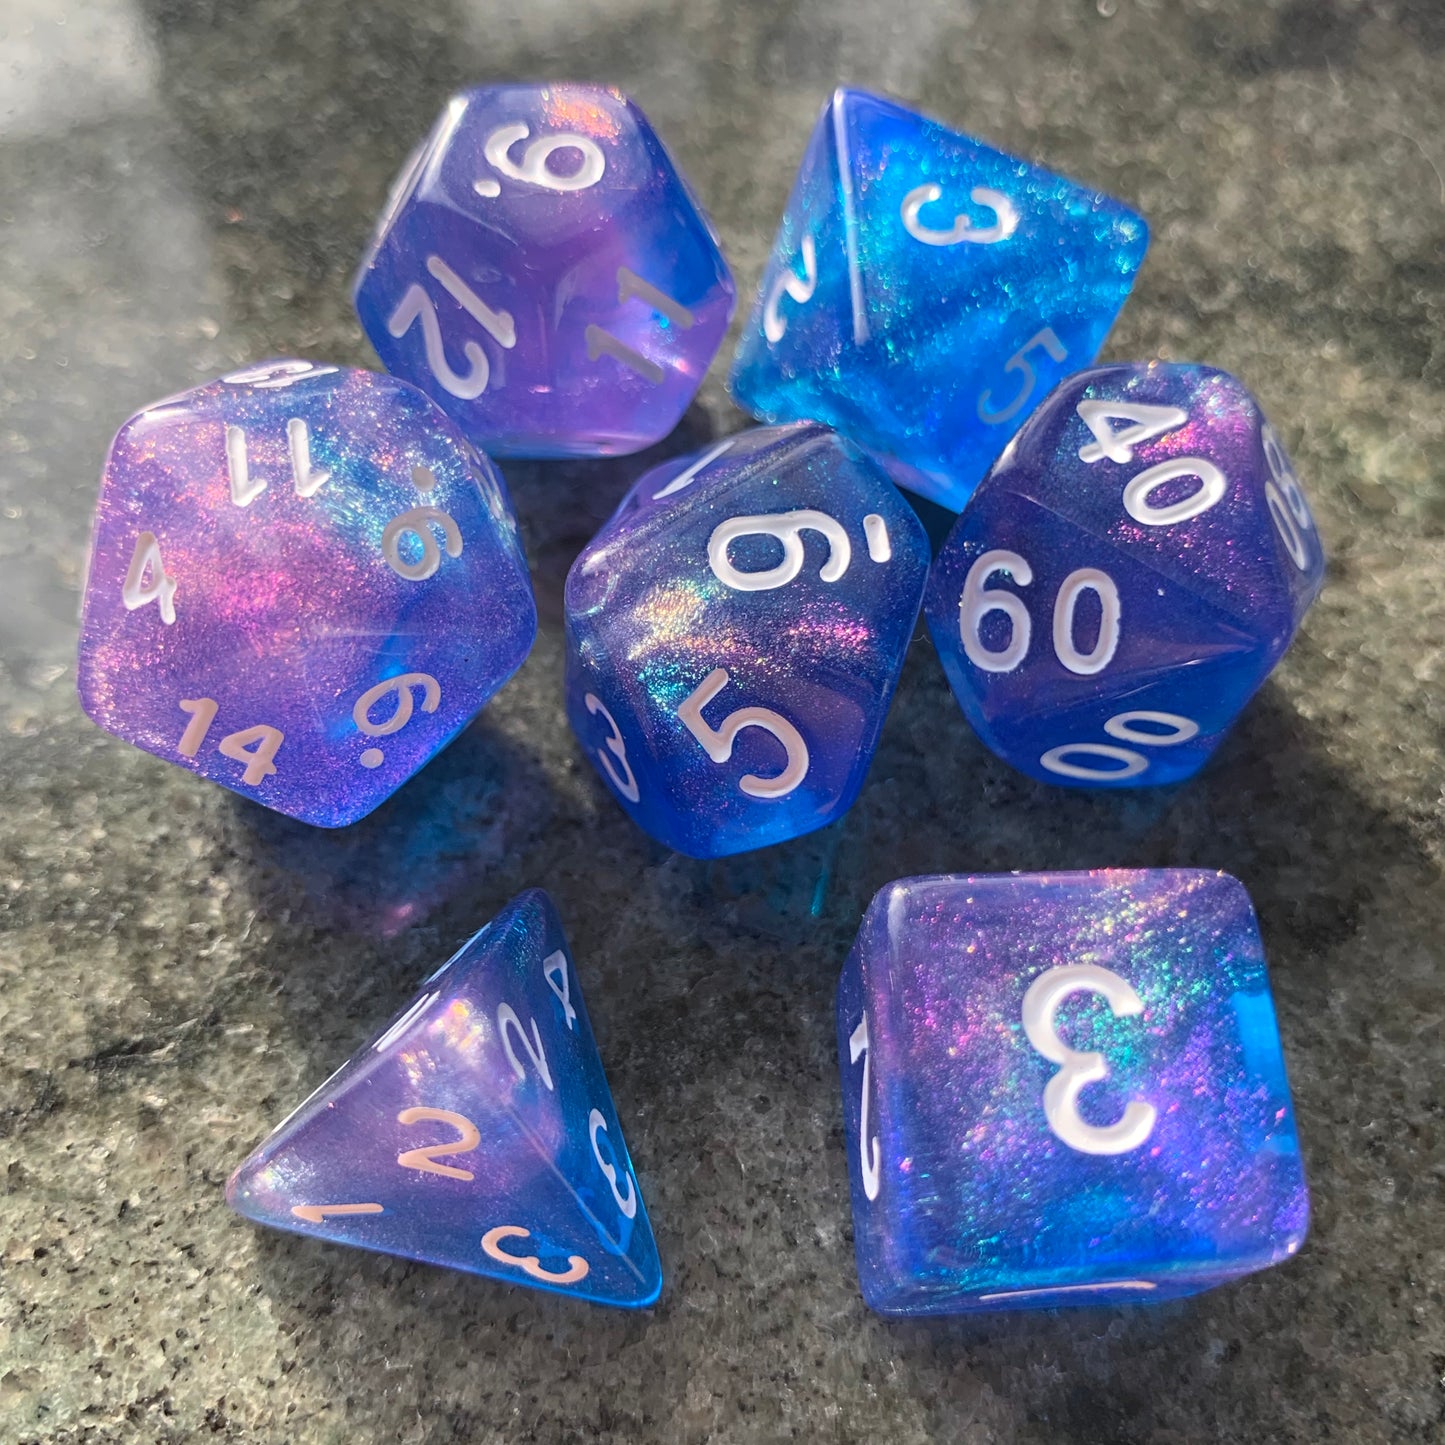 Violet Galaxy - Iridescent Galaxy dice set - 7 piece RPG dice set